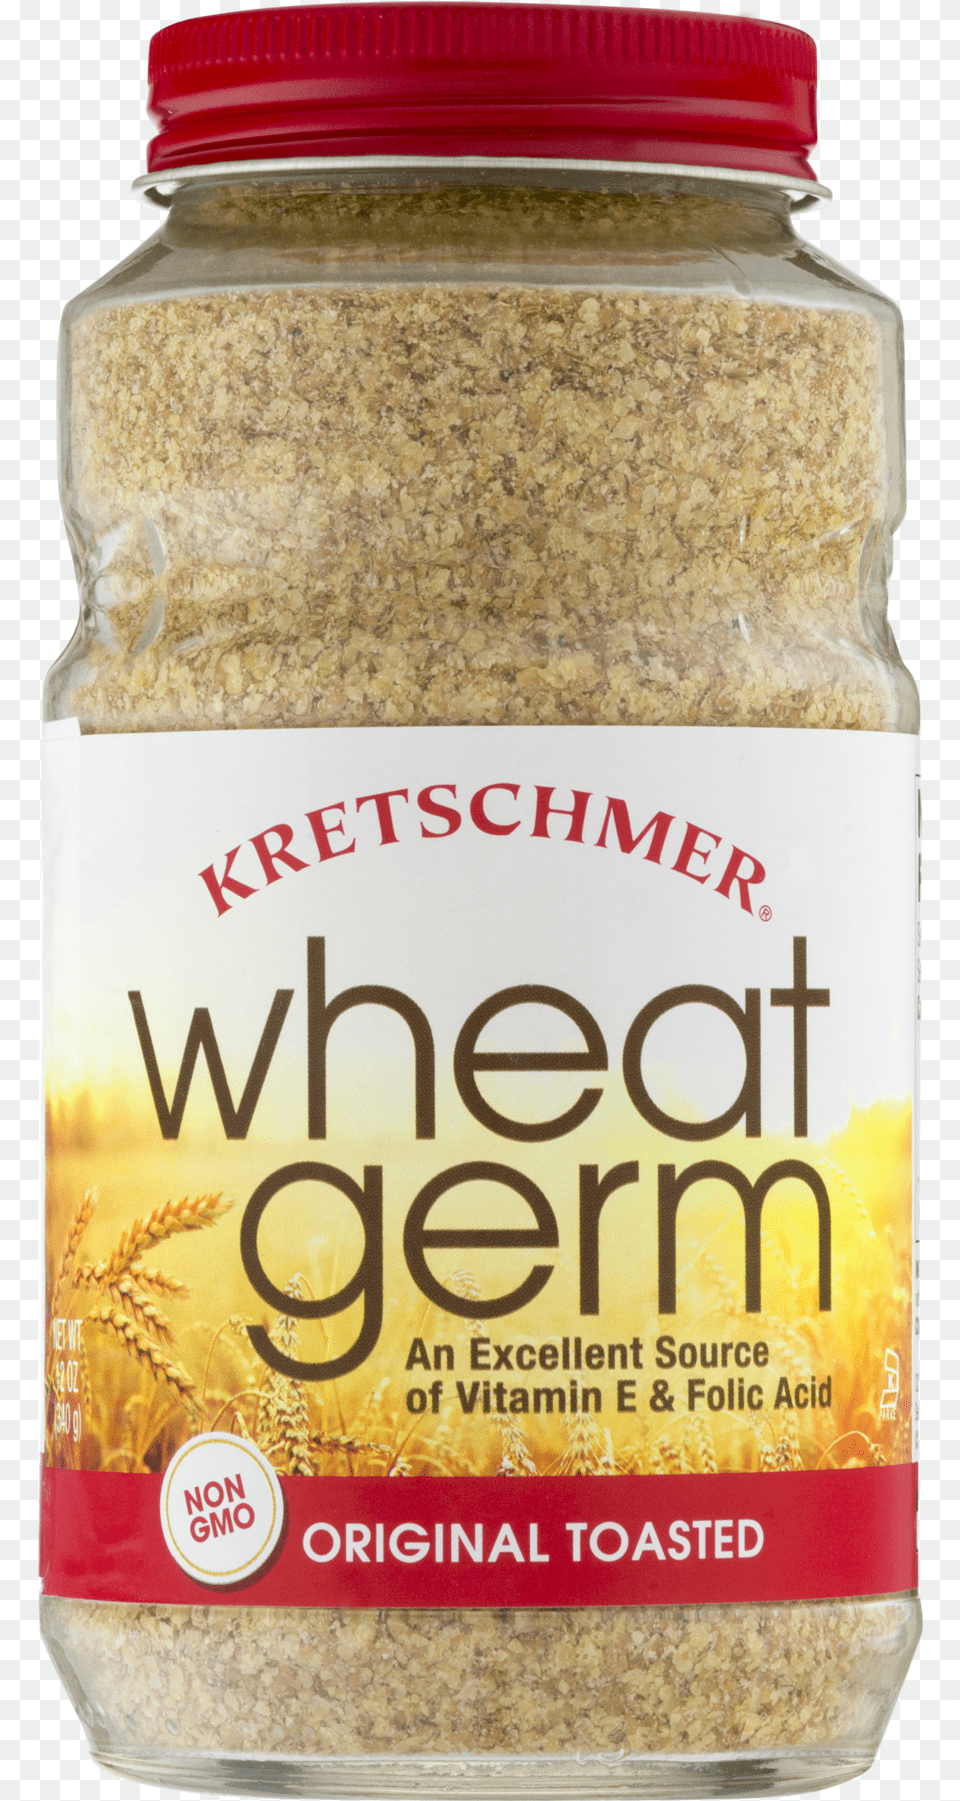 Kretschmer Original Toasted Wheat Germ 12 Oz Kretschmer Original Toasted Wheat Germ 12 Oz Jar, Food, Mustard Png Image